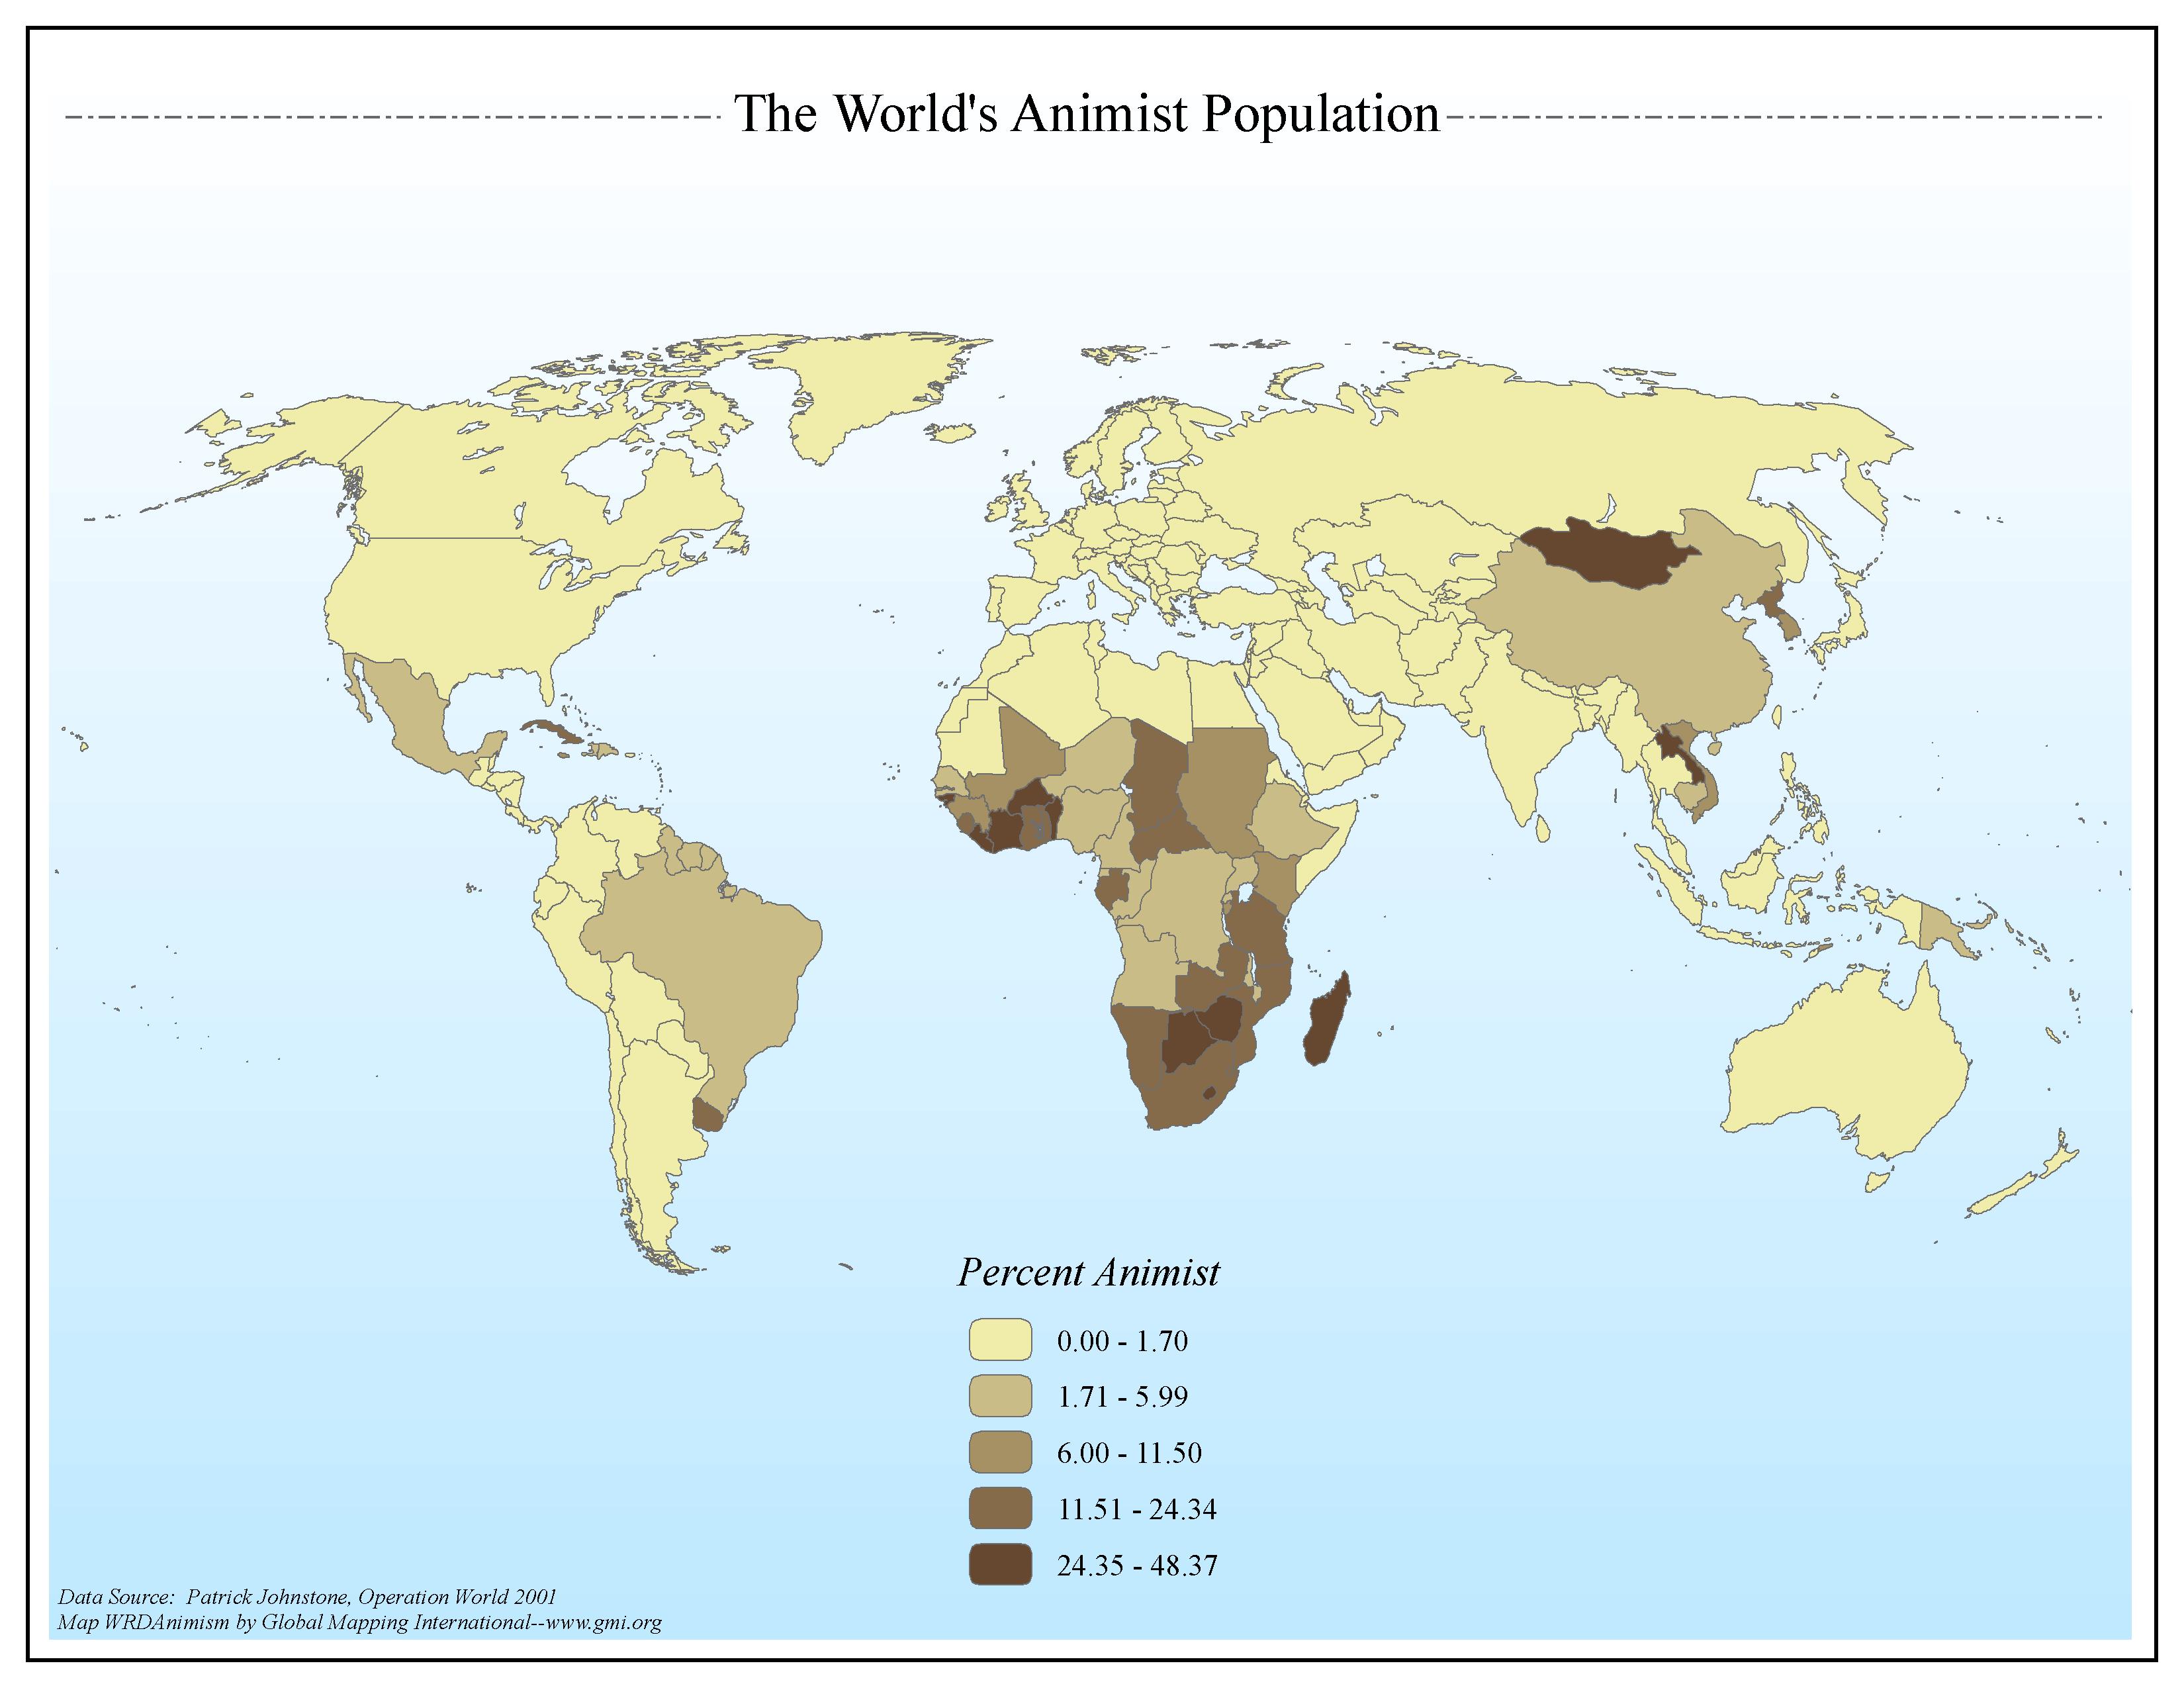 The World's Animist Population